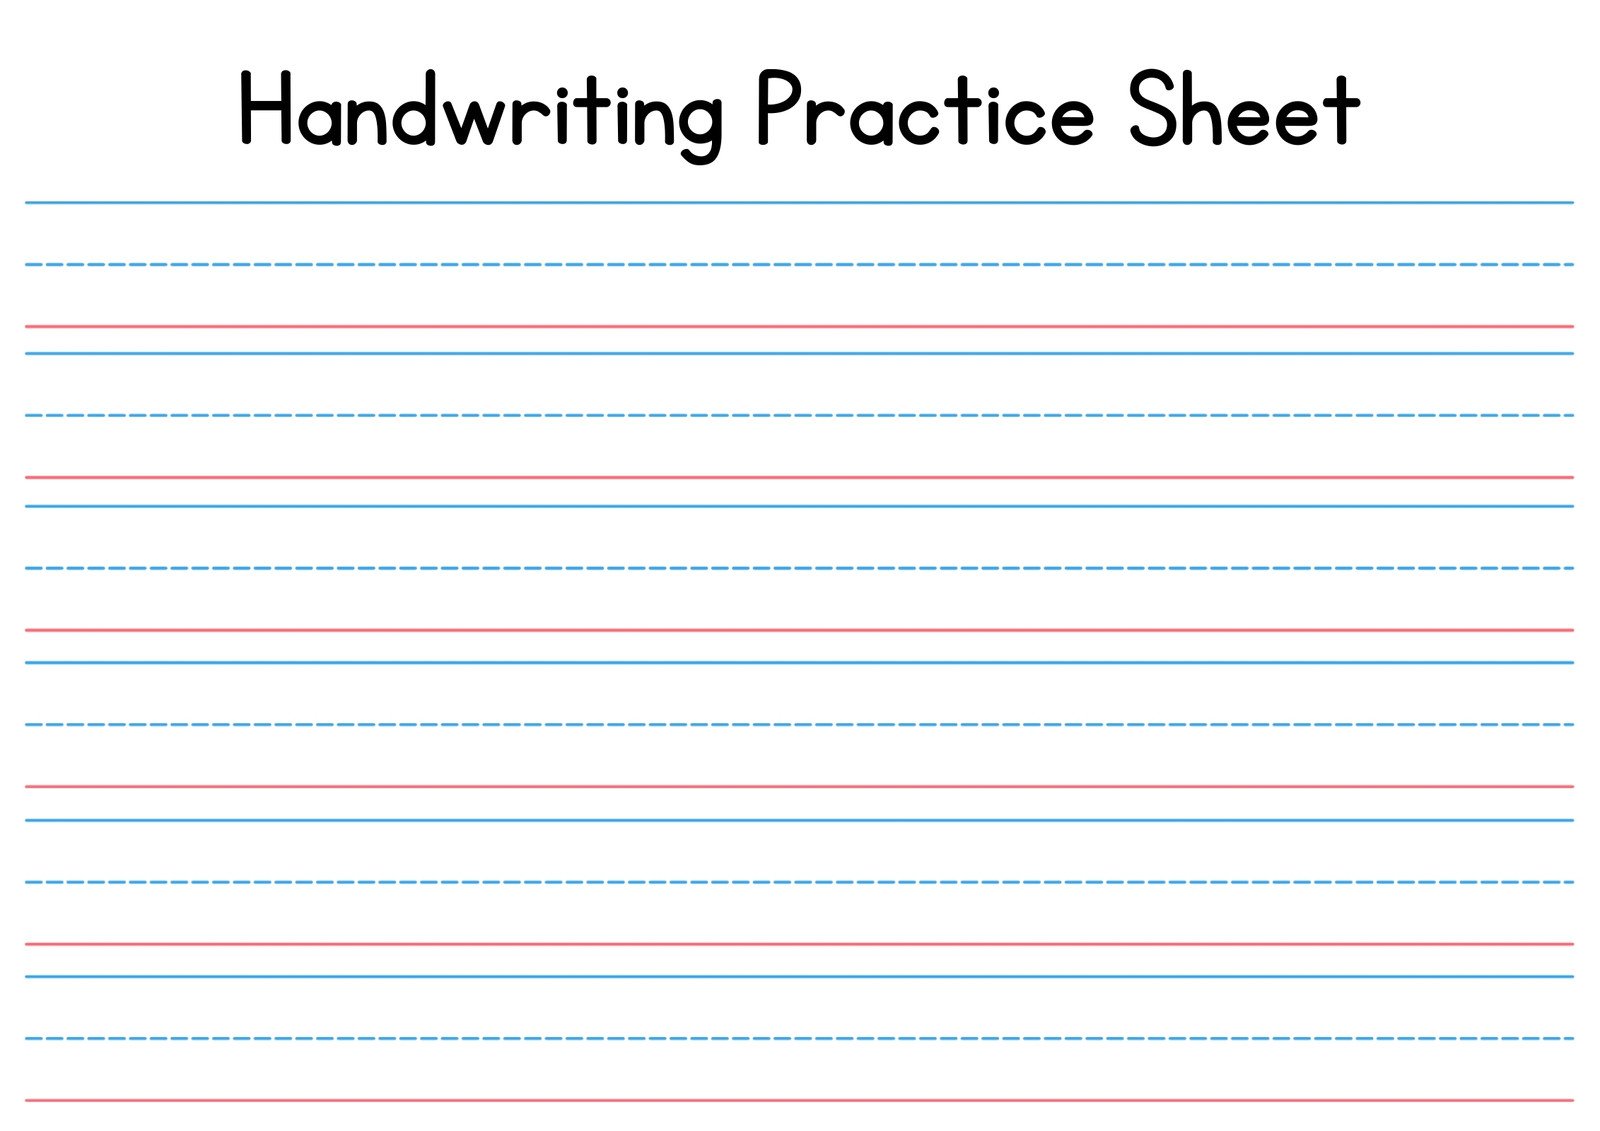 handwriting practice sheet